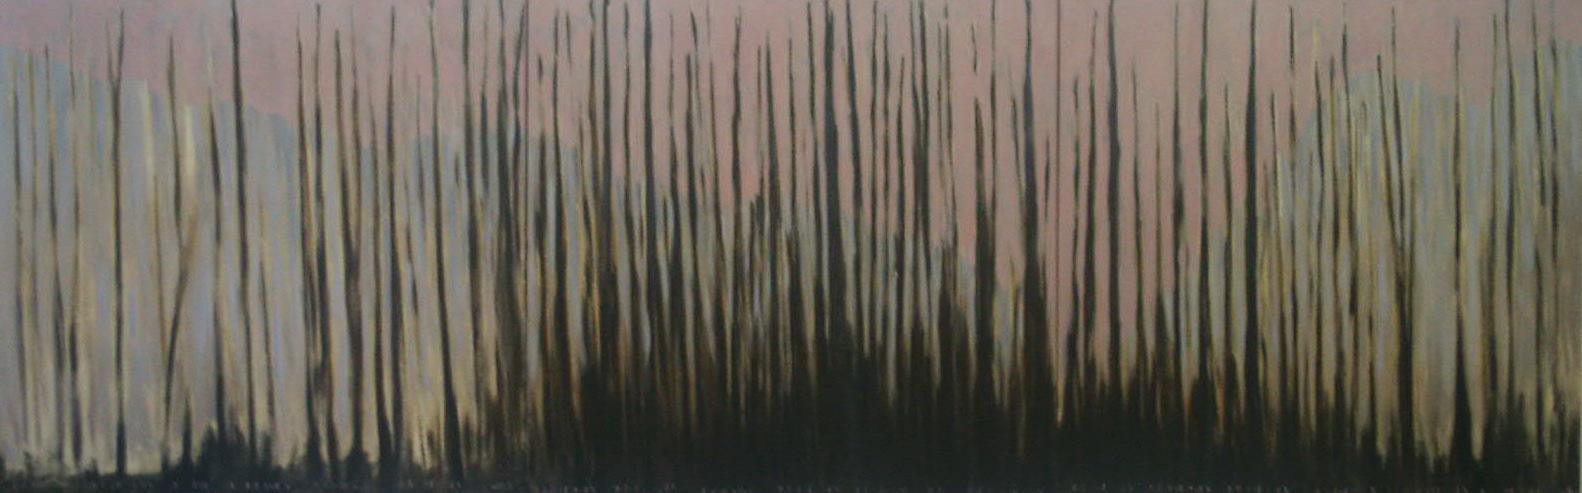   Teton Sunrise   oil on canvas  48" x 150" (triptych)  2002  $20,000 